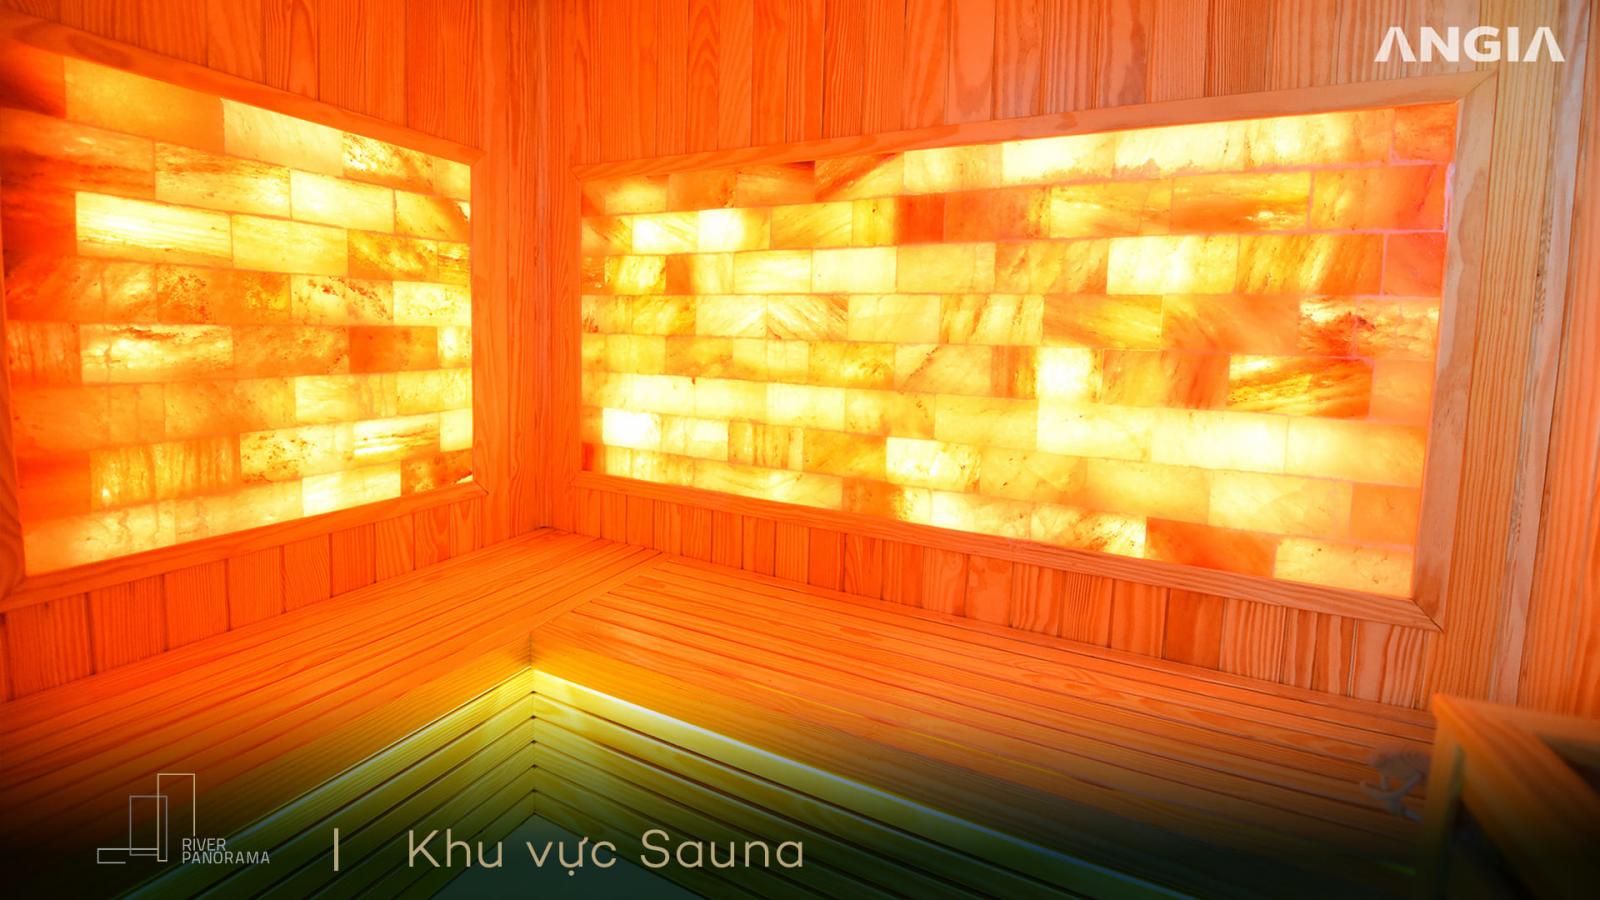 Khu vực sauna